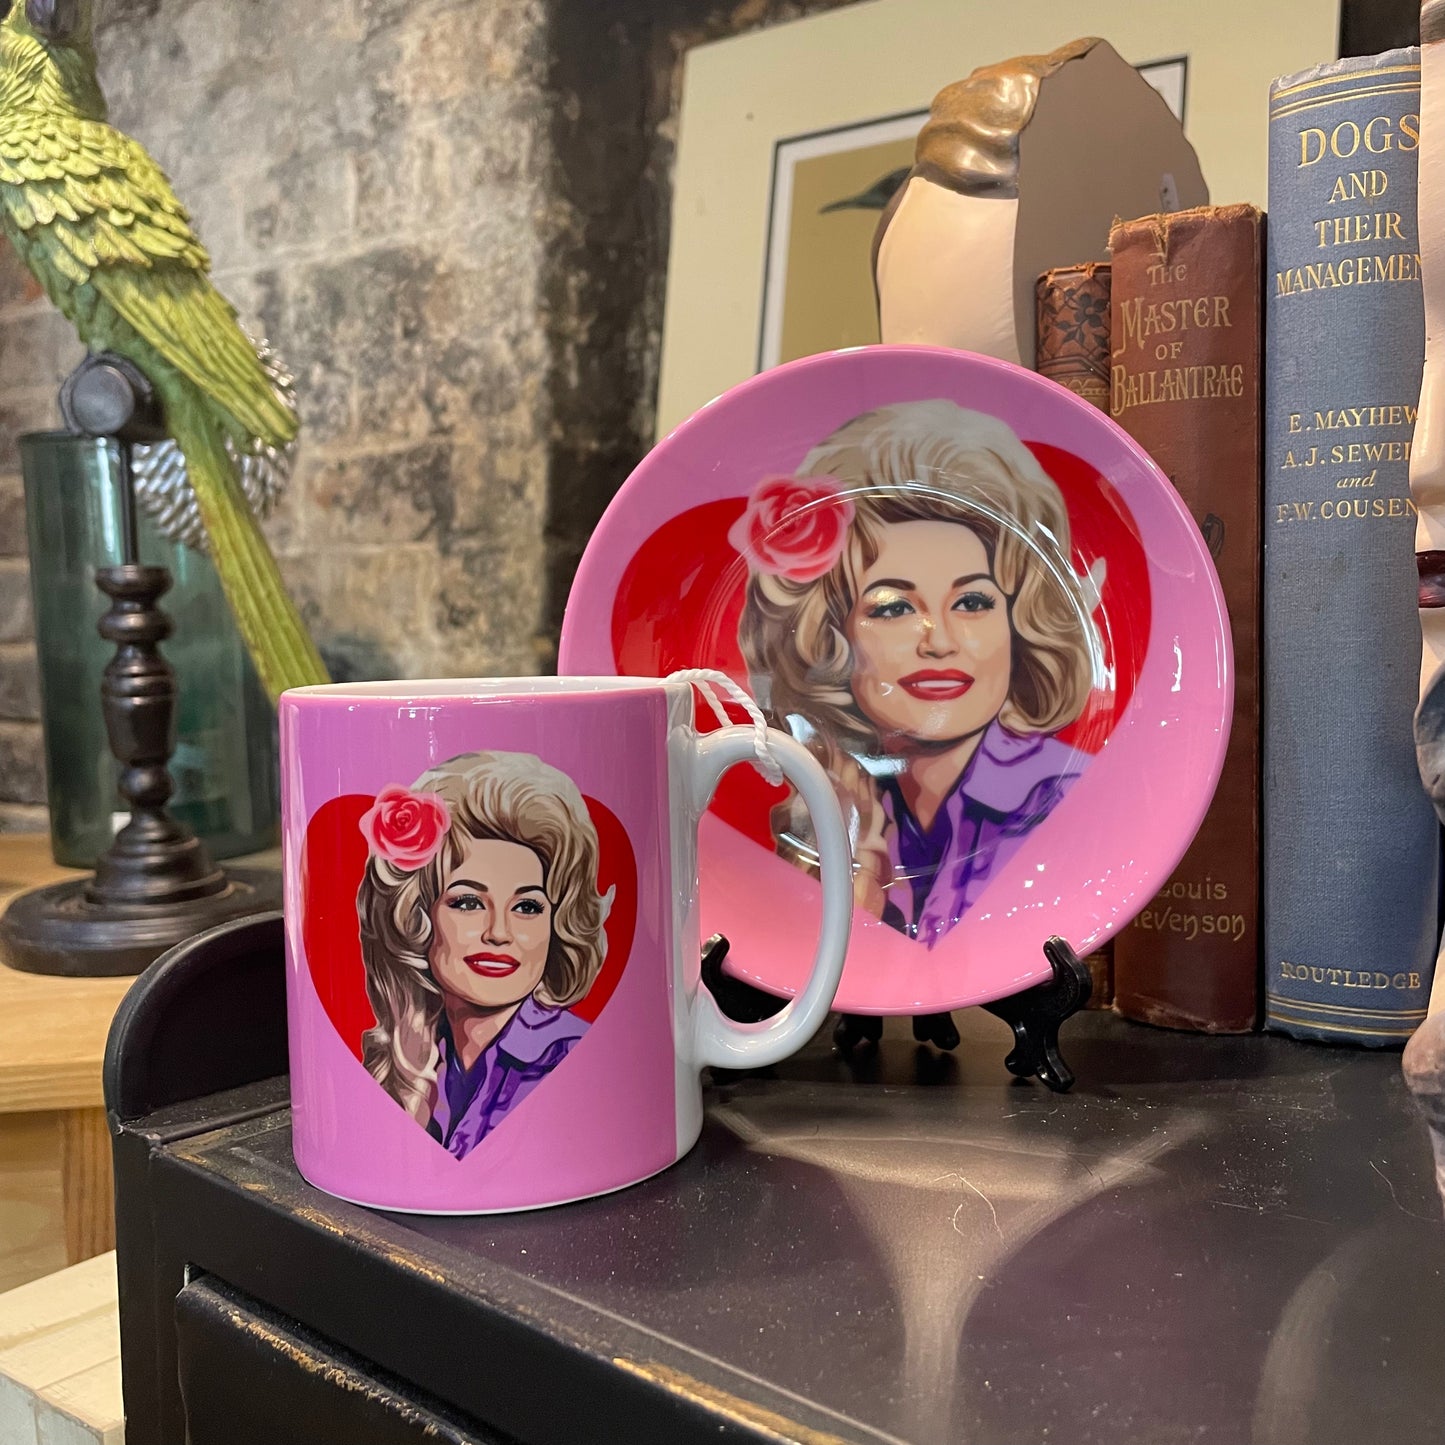 'Dolly in red heart' Mug